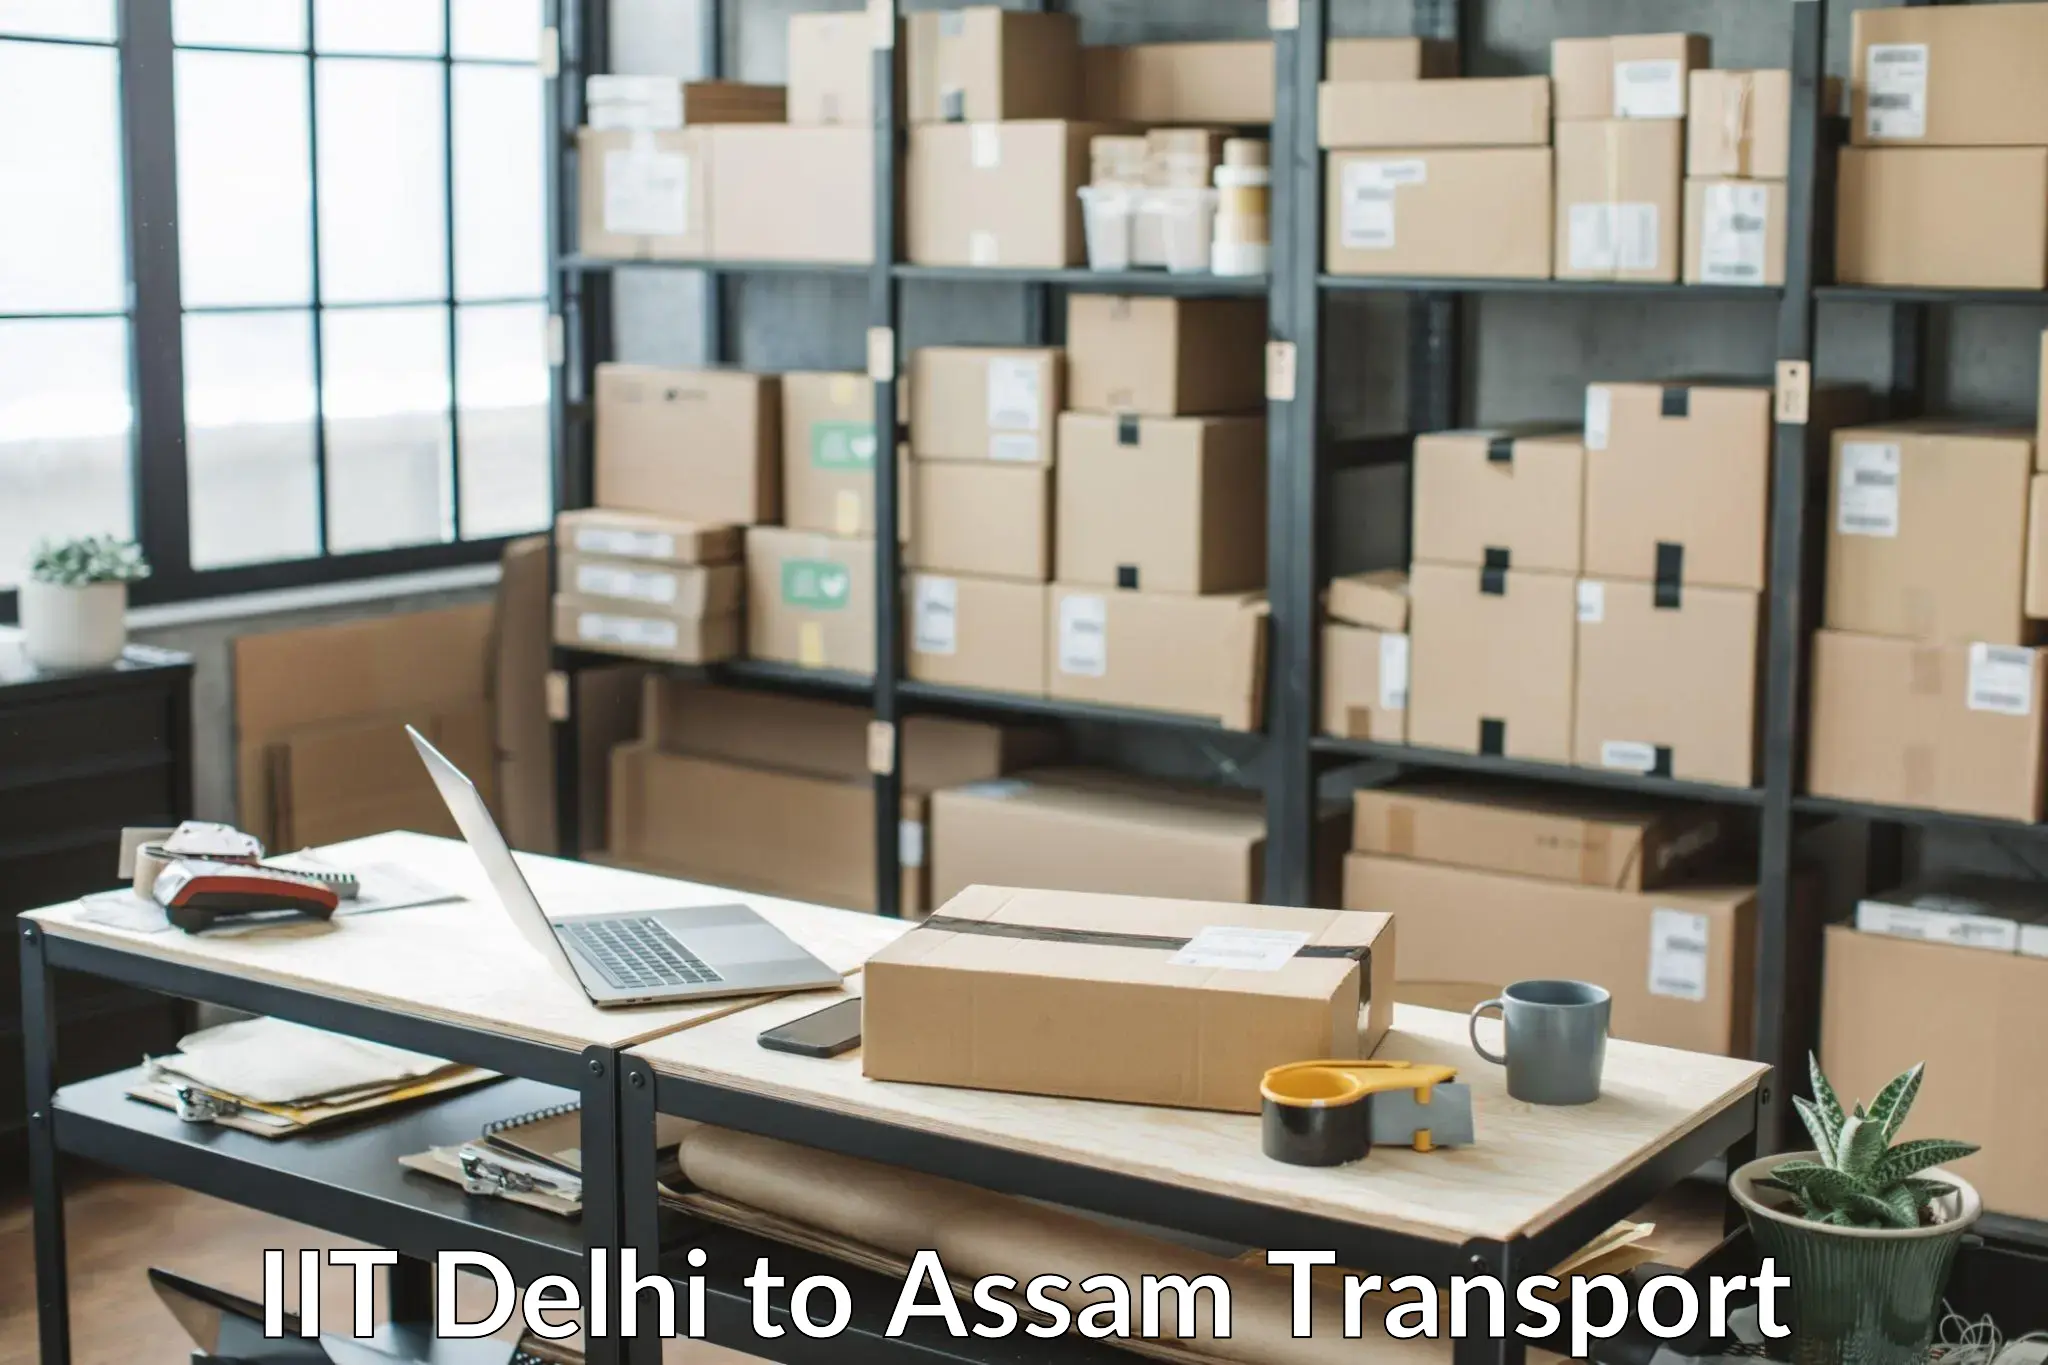 Daily parcel service transport IIT Delhi to Guwahati University